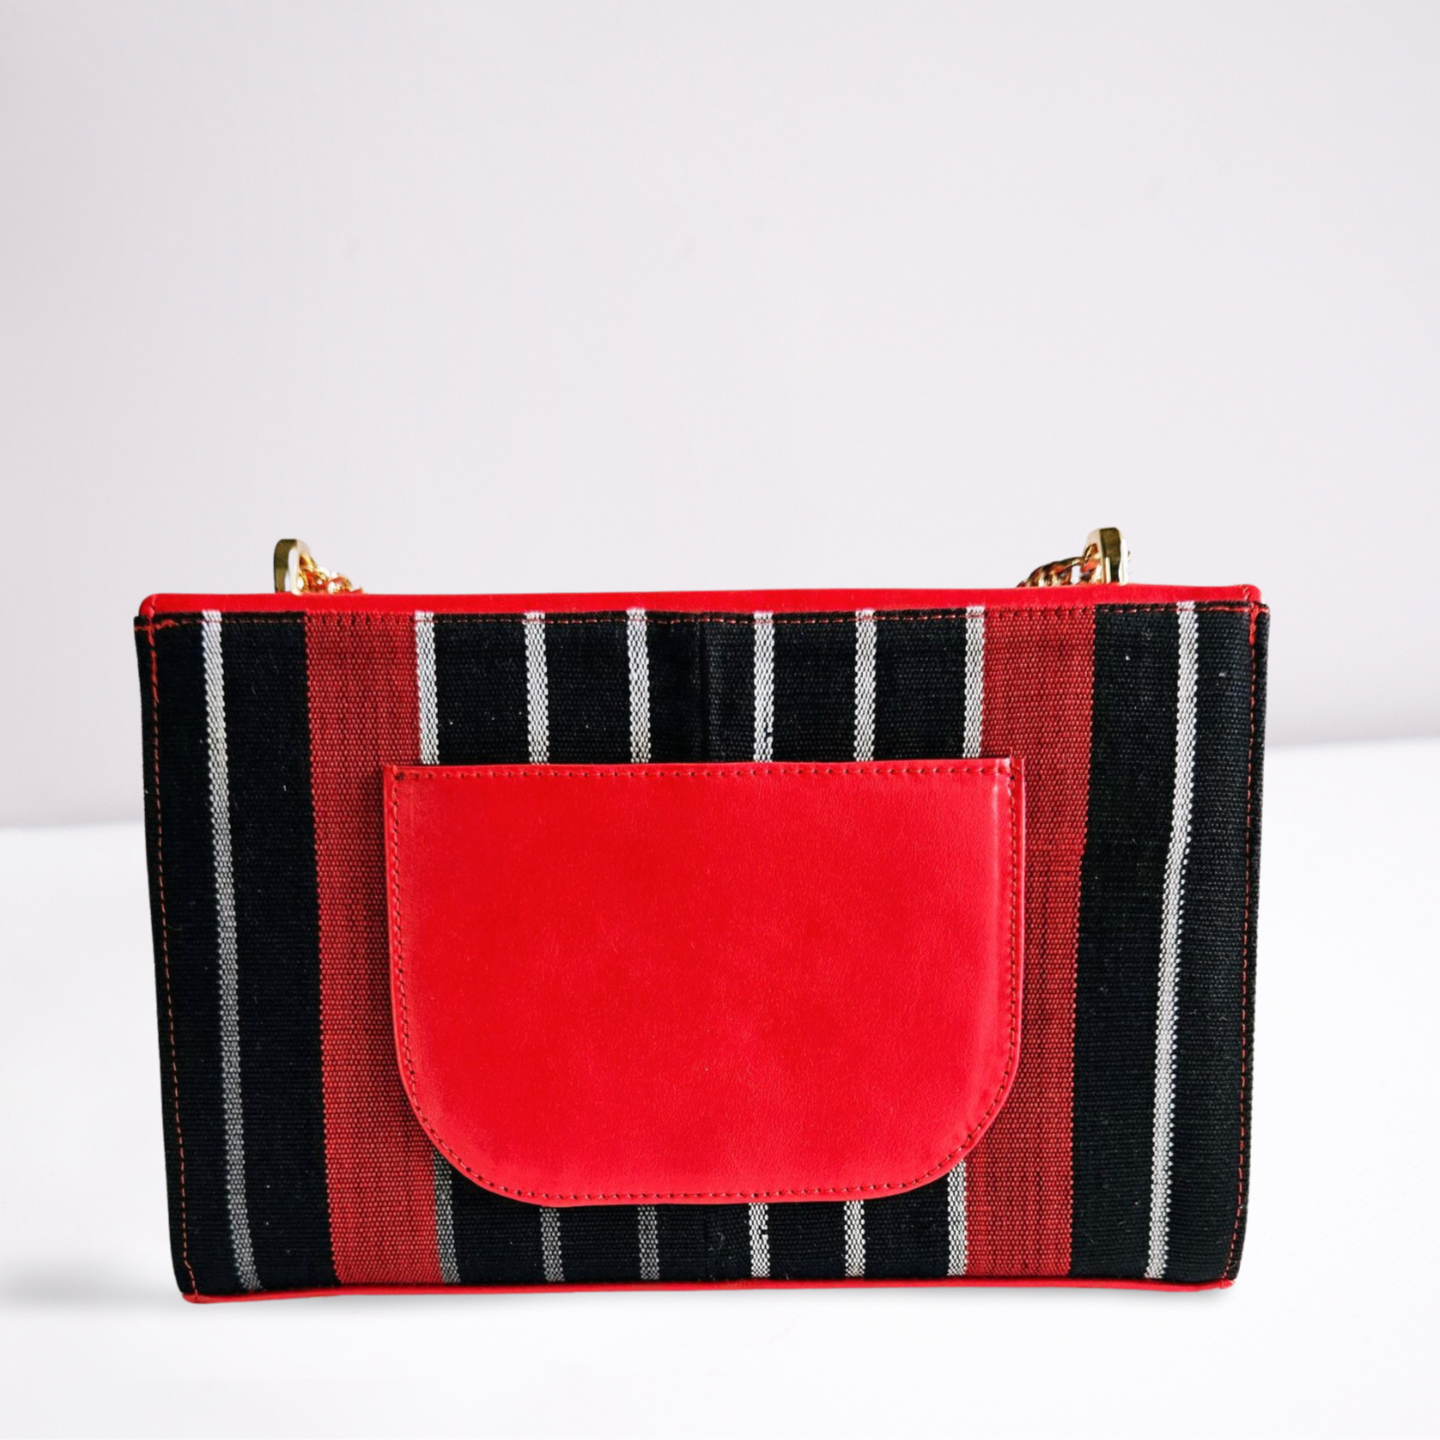 Zuri Leather Handbag - Red